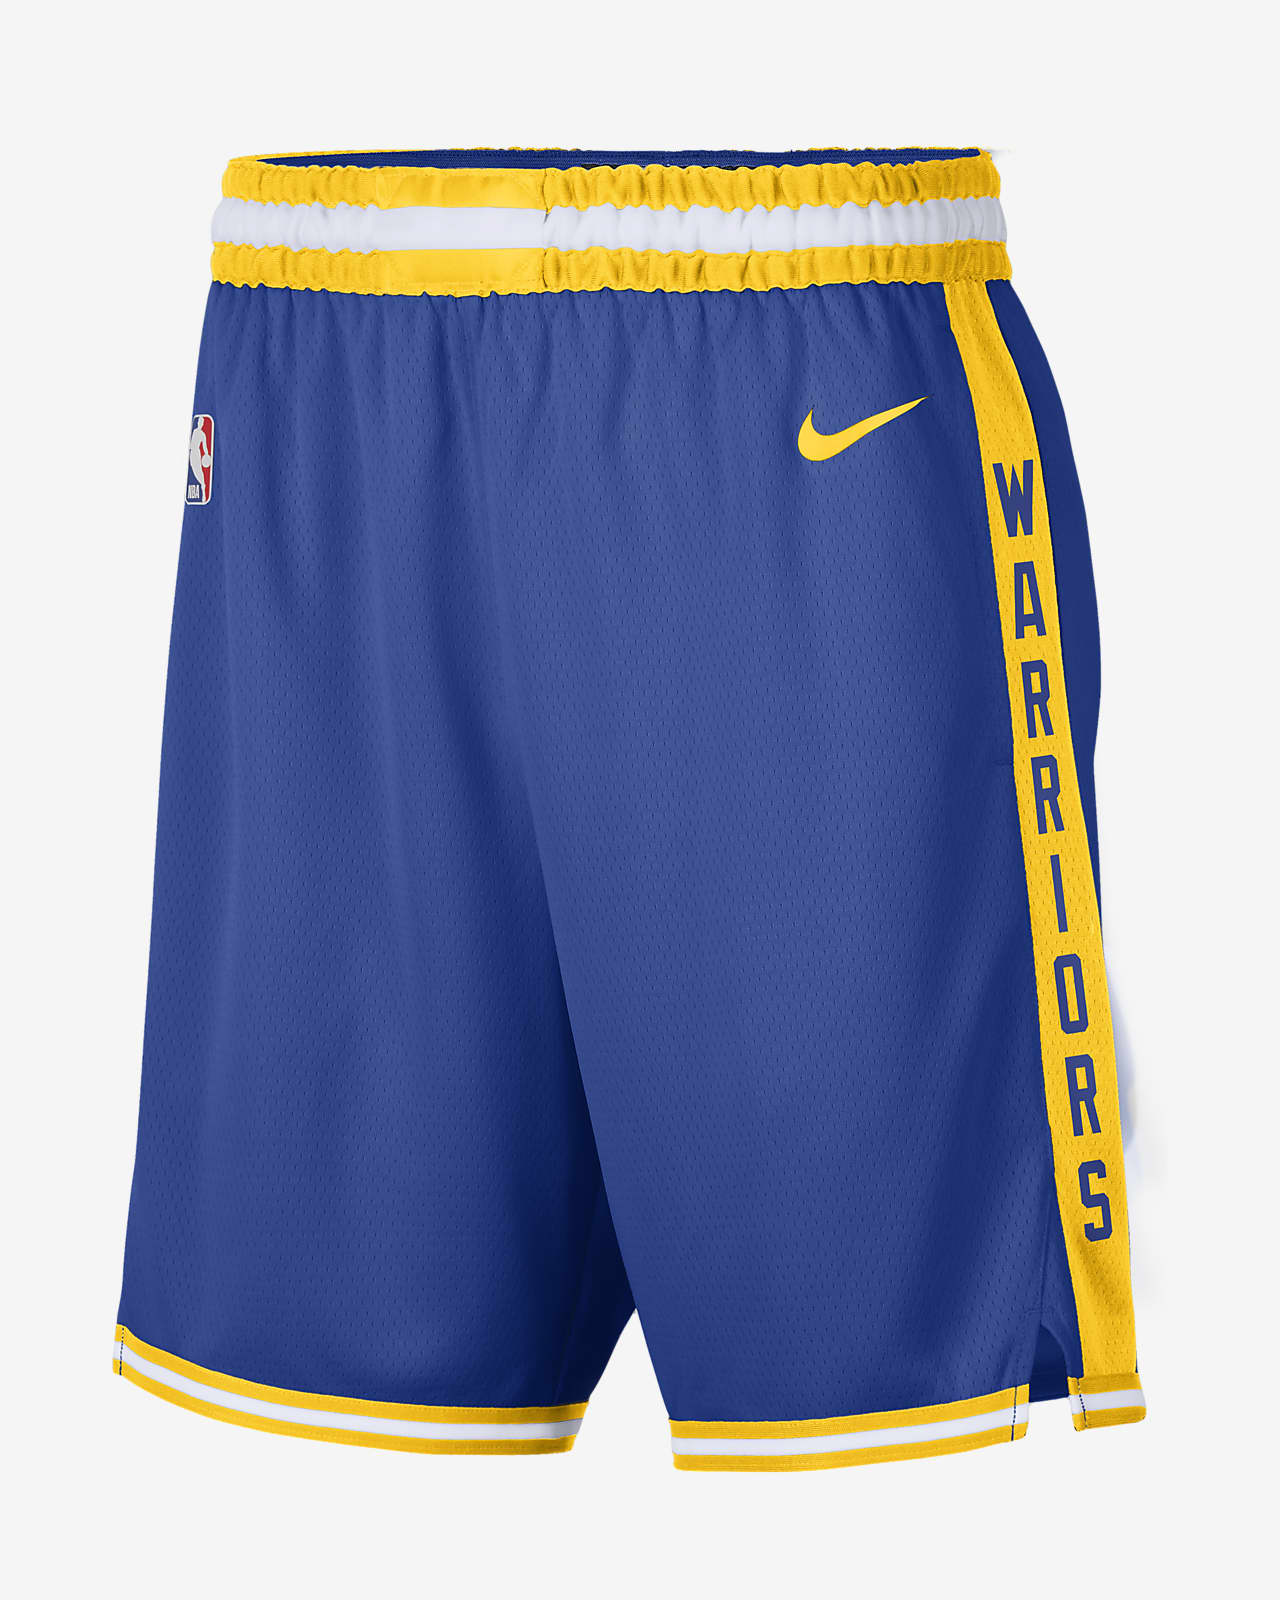 Golden State Warriors Classic Edition 2020 Men's Nike NBA Swingman Shorts